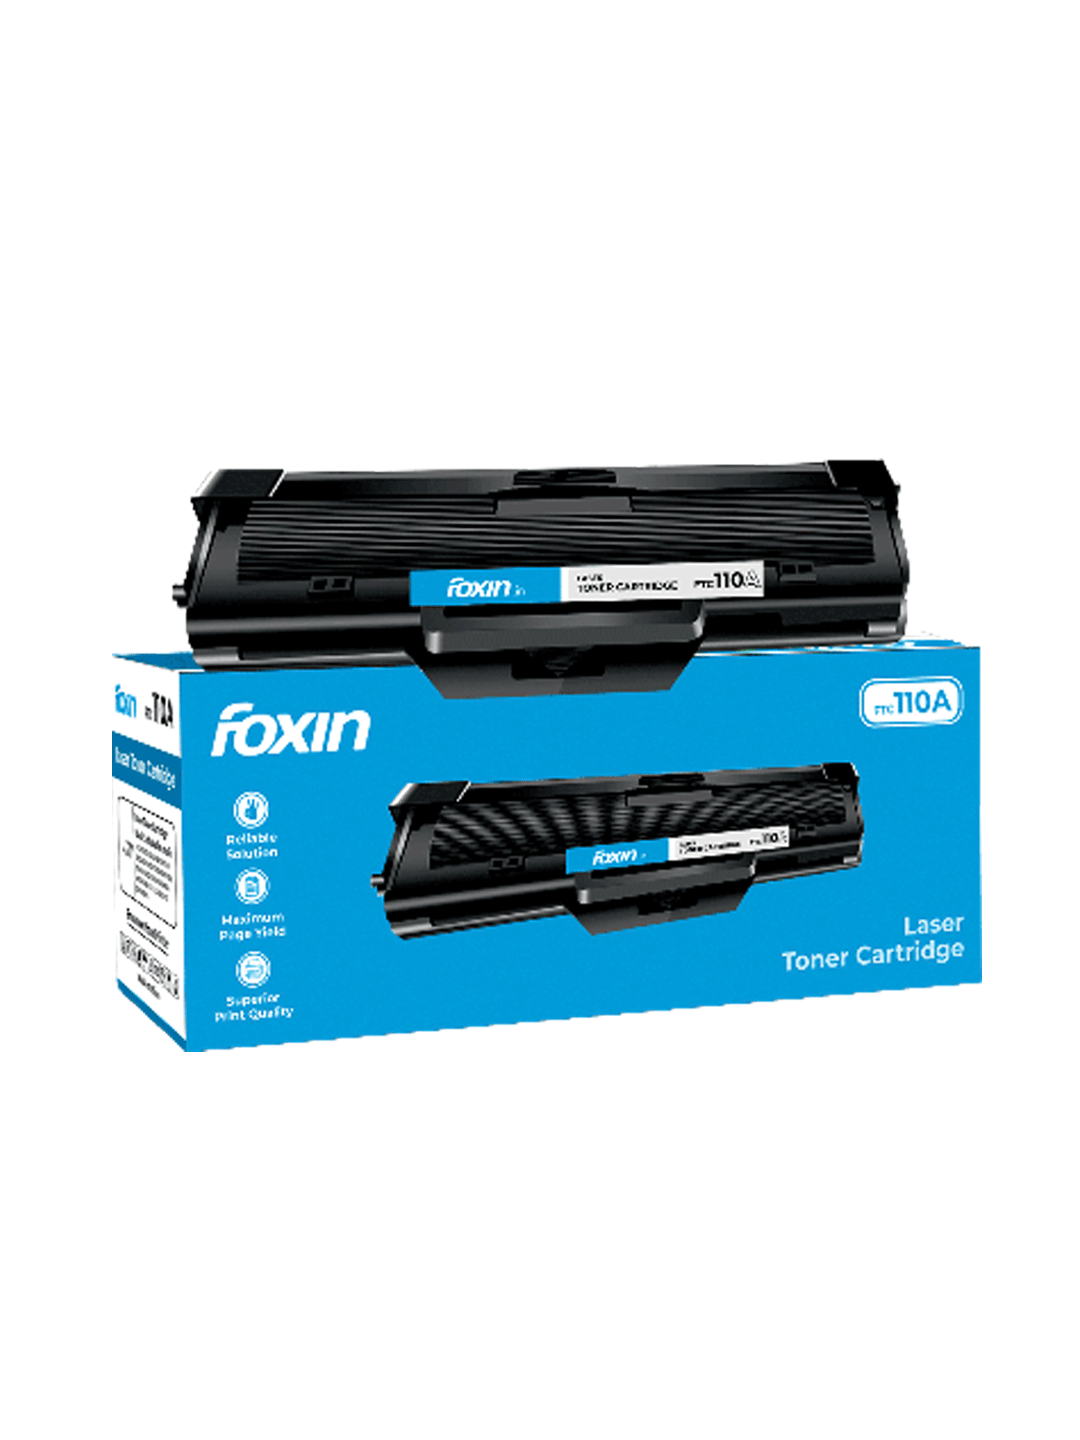 Foxin FTC-110A Laser 